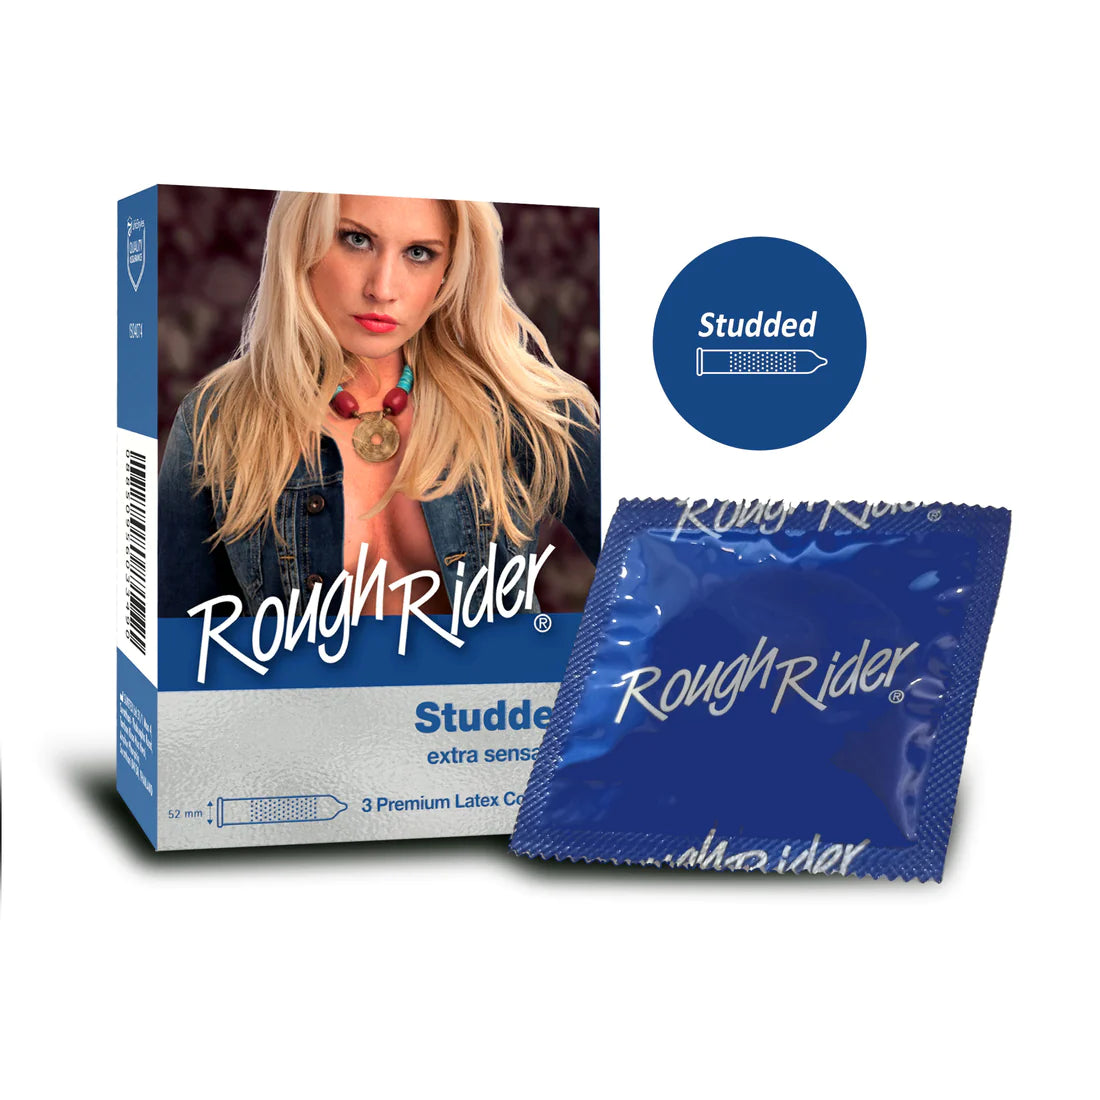 Rough Rider® Studded Condoms 3's